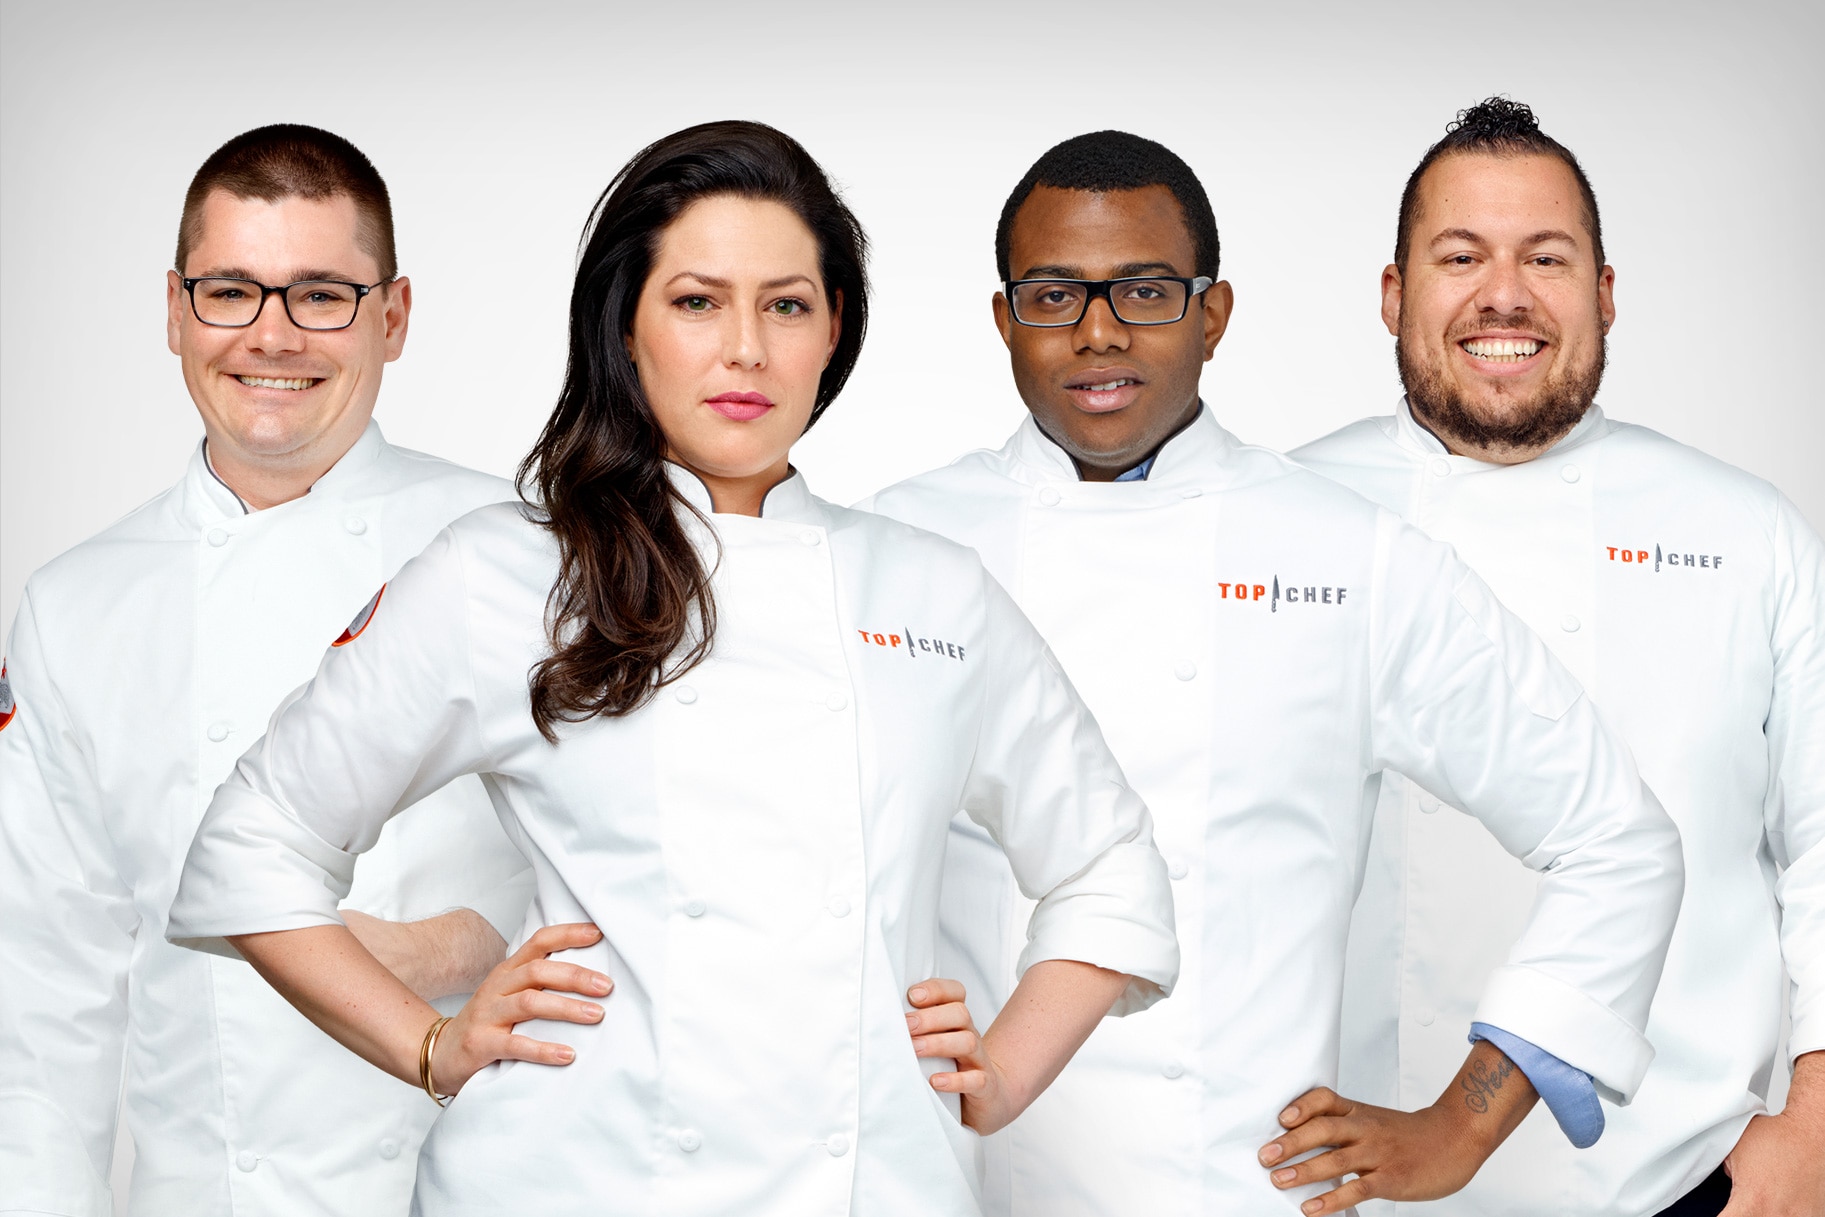 Top Chef Season 13 Chefs: Kwame Onwuachi, Amar Santana, Grayson Schmitz, Stratton | Top Chef Blog